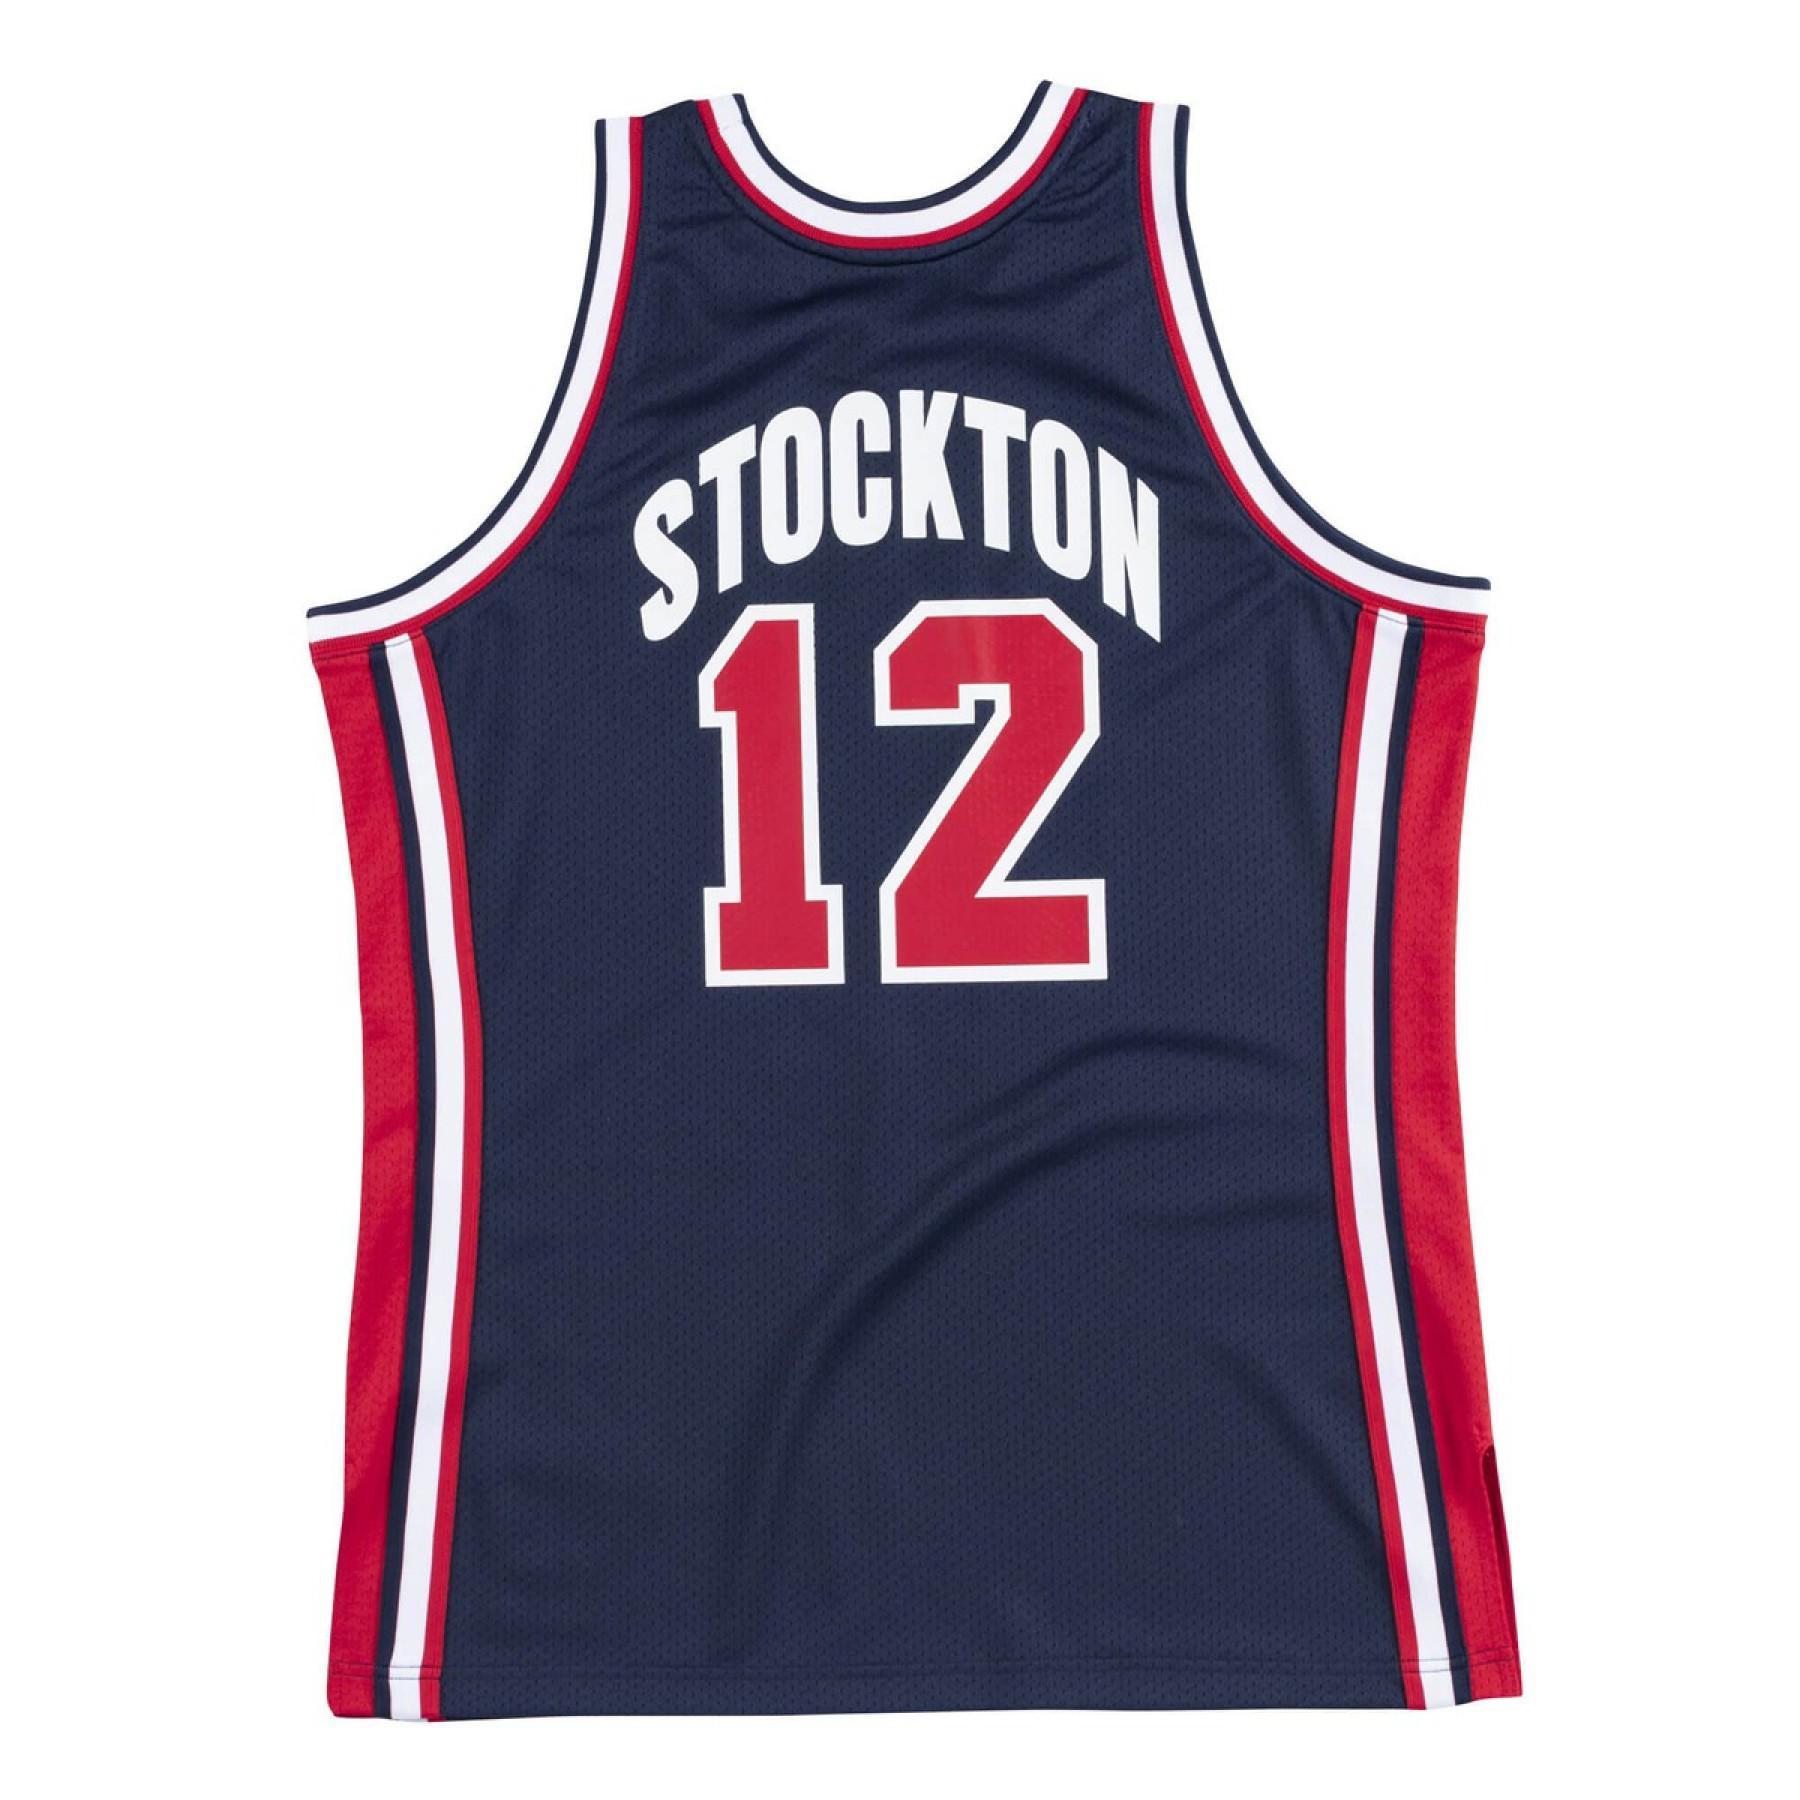 Autentyczna koszulka drużyny USA nba John Stockton